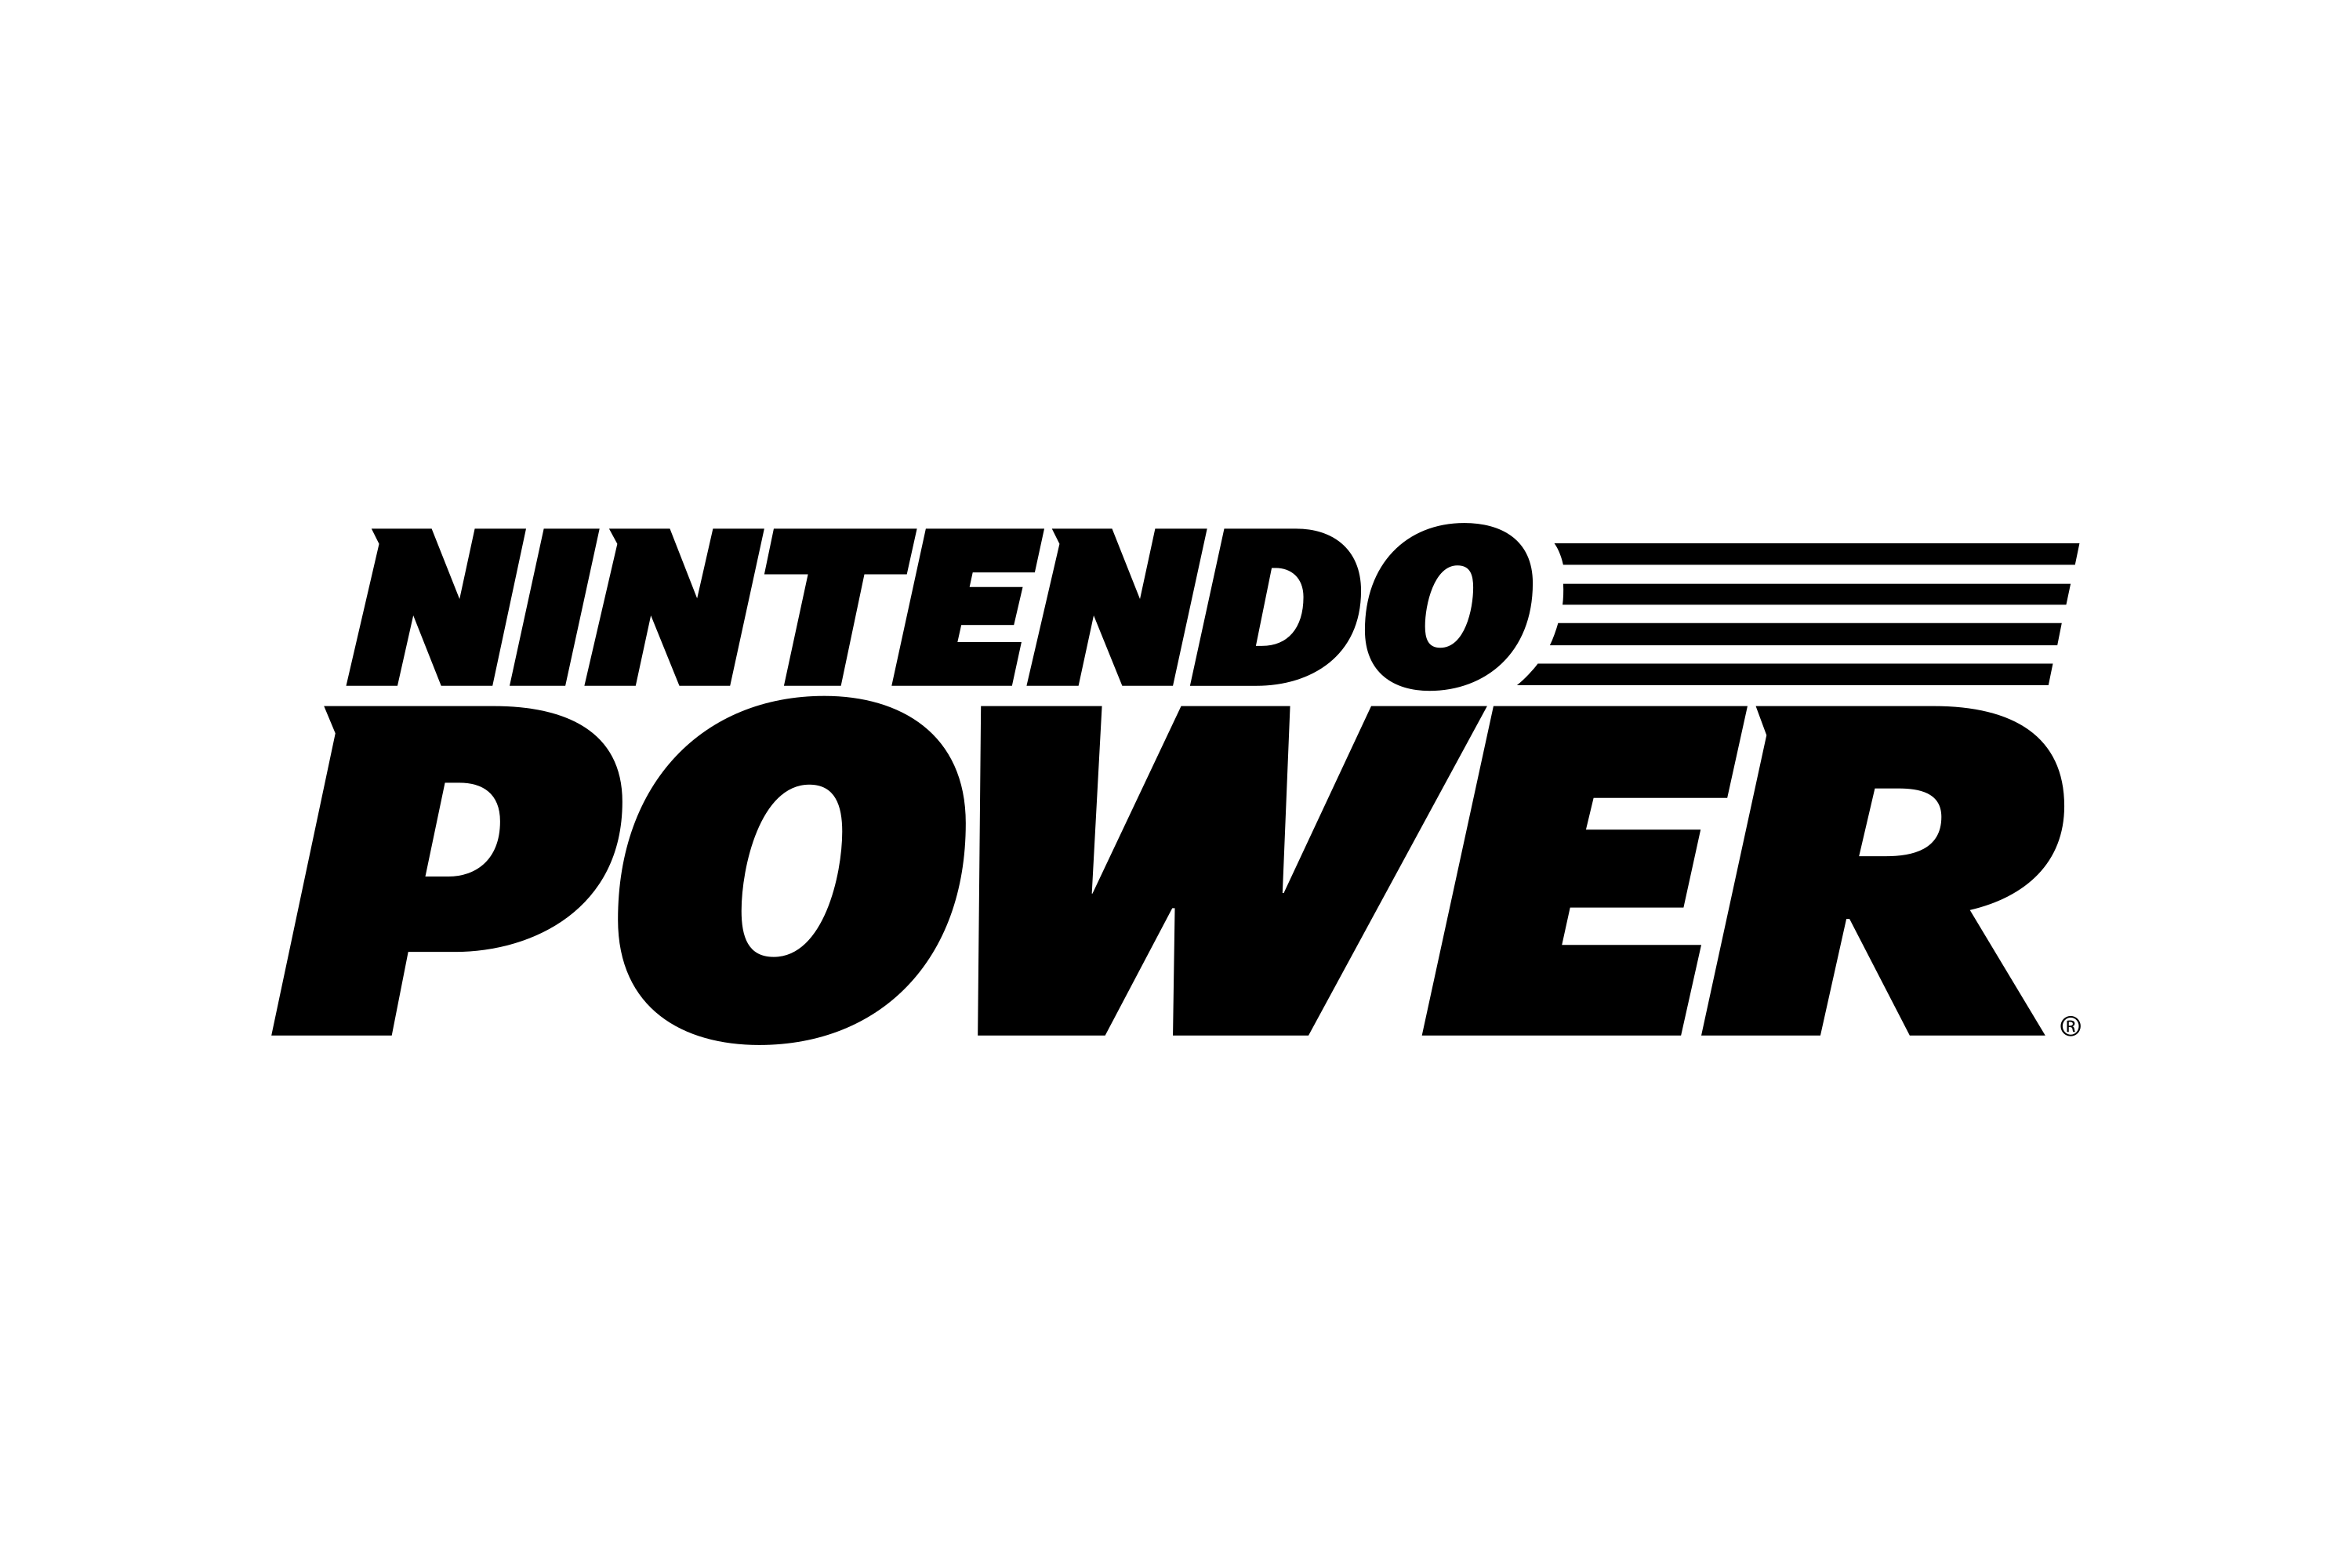 Power logo. Nintendo Power logo. Power картинки. Нинтендо вектор.